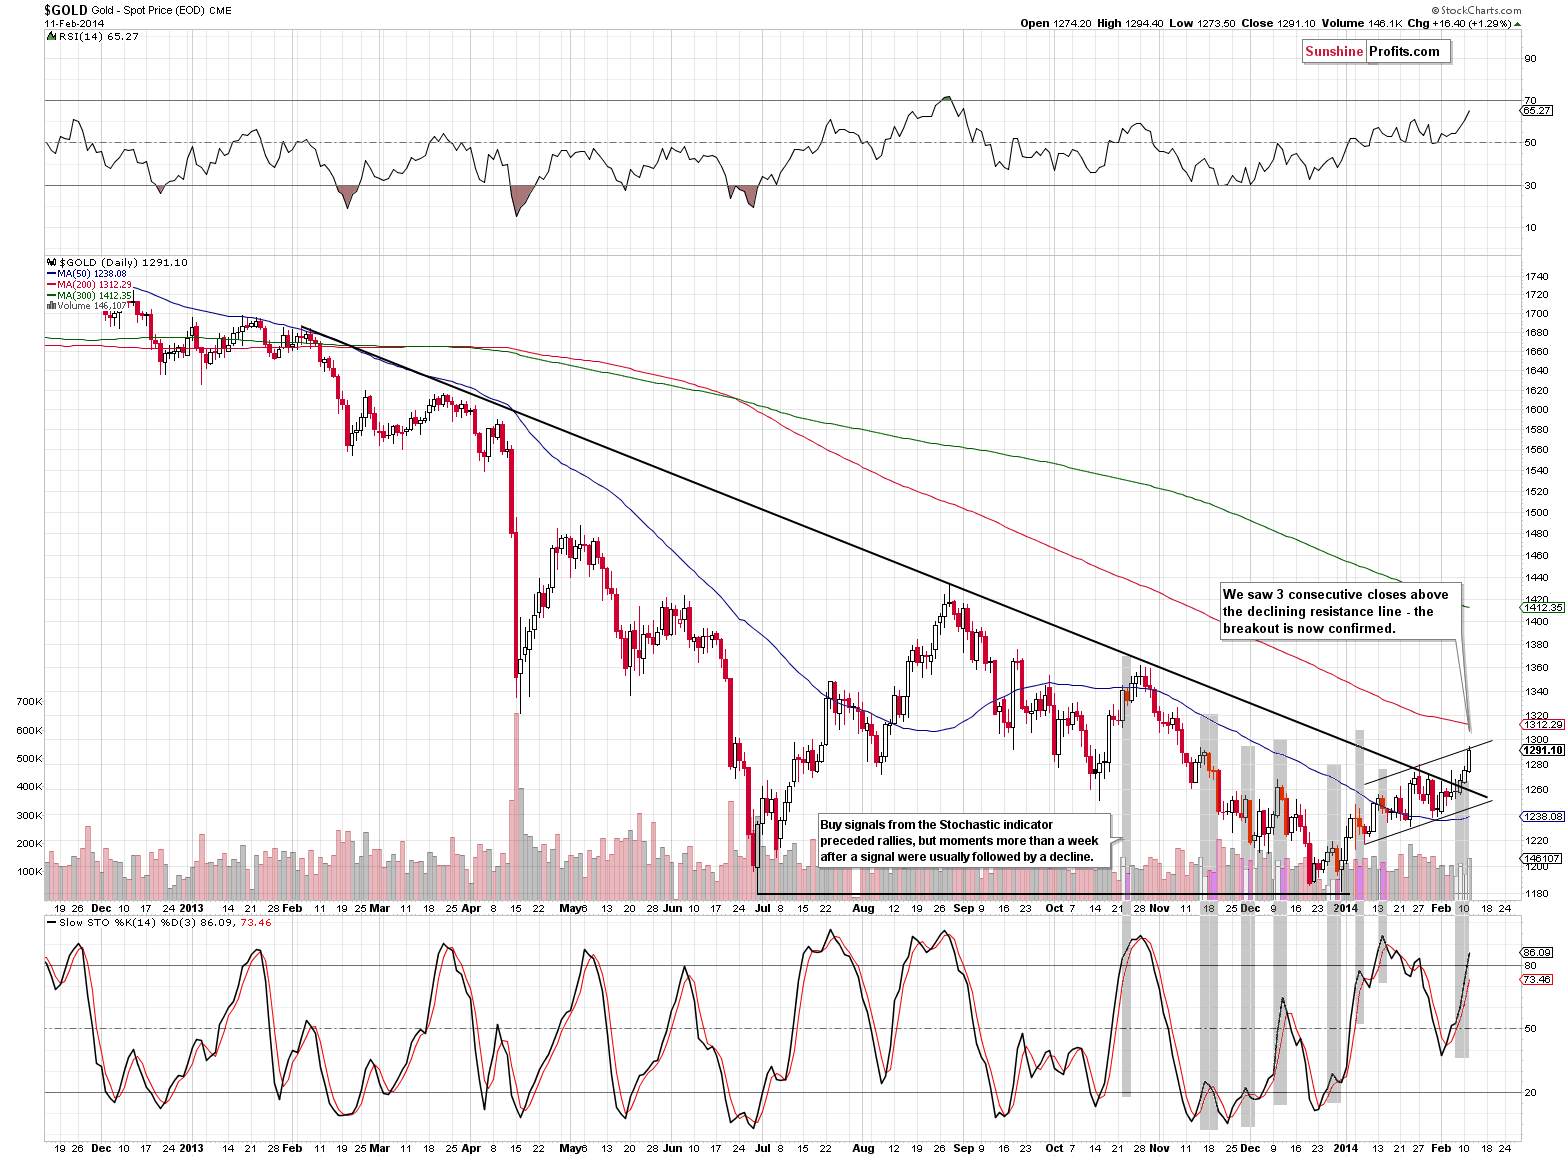 Medium-term Gold price chart - Gold spot price